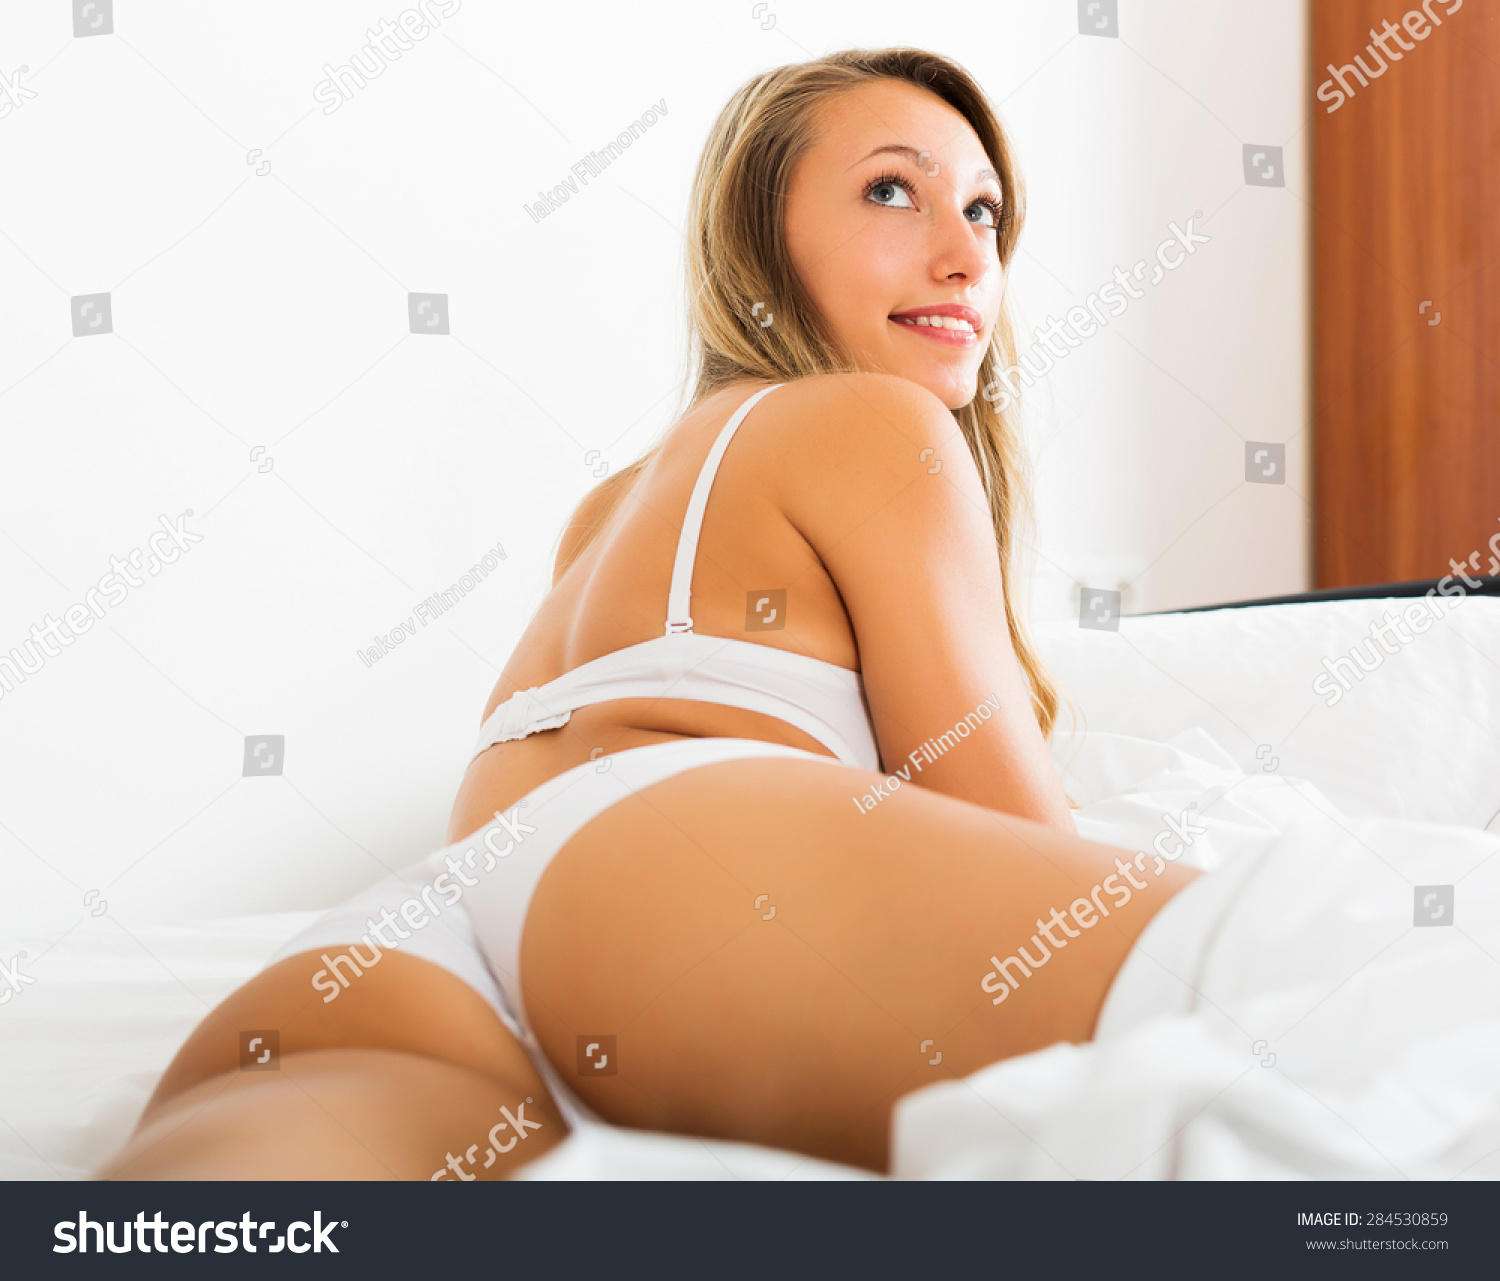 Sexy Woman Image 49